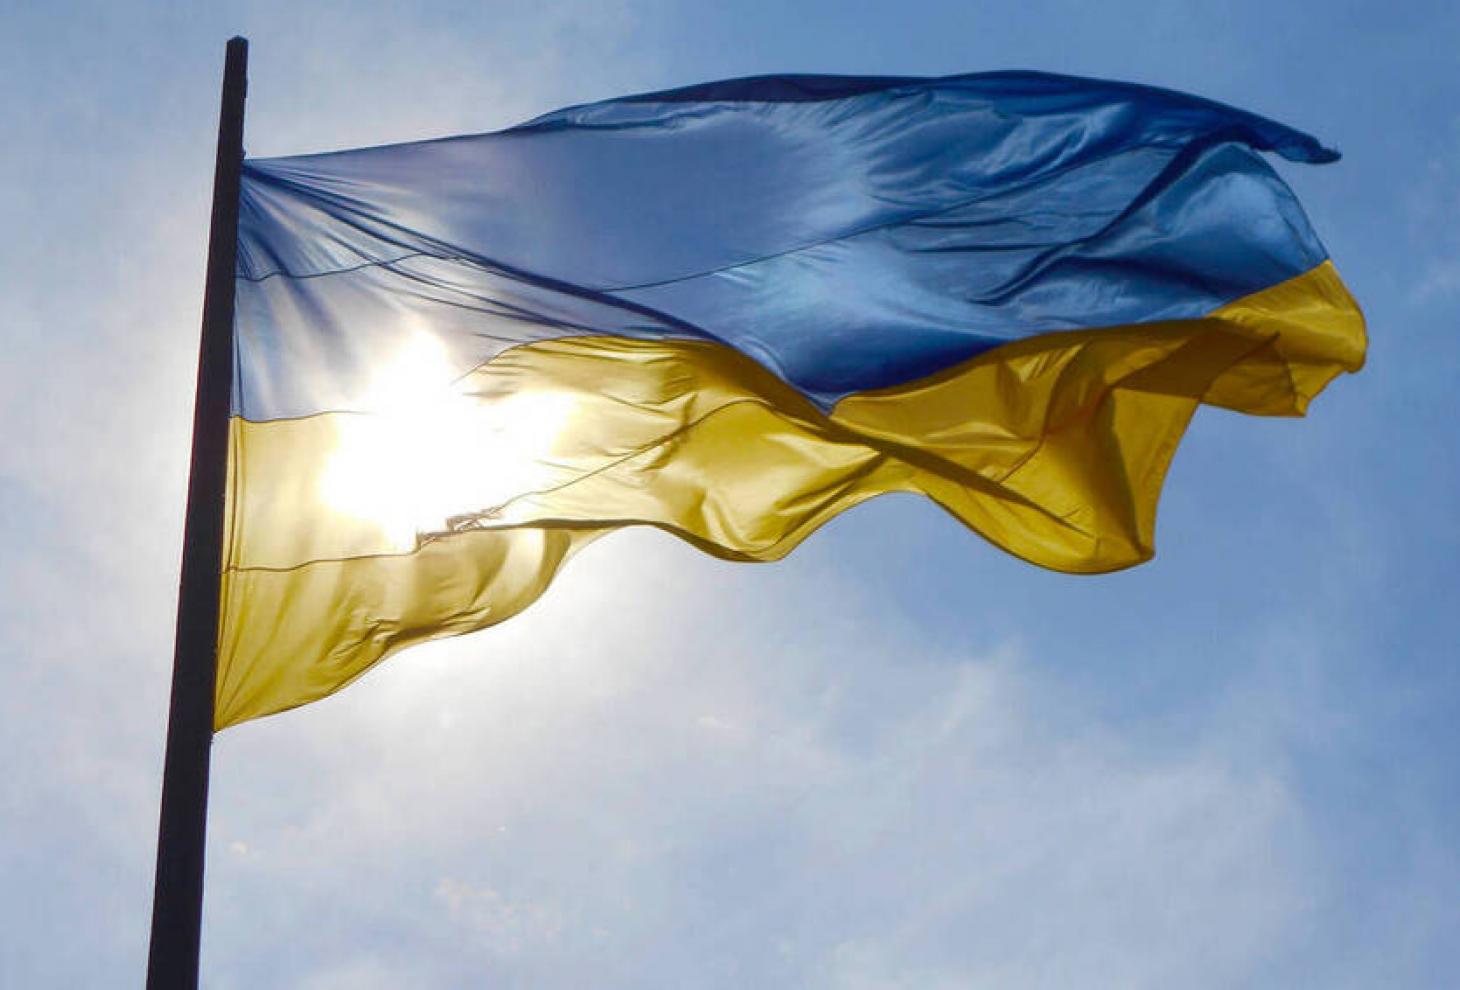 Bandiera ucraina che sventola